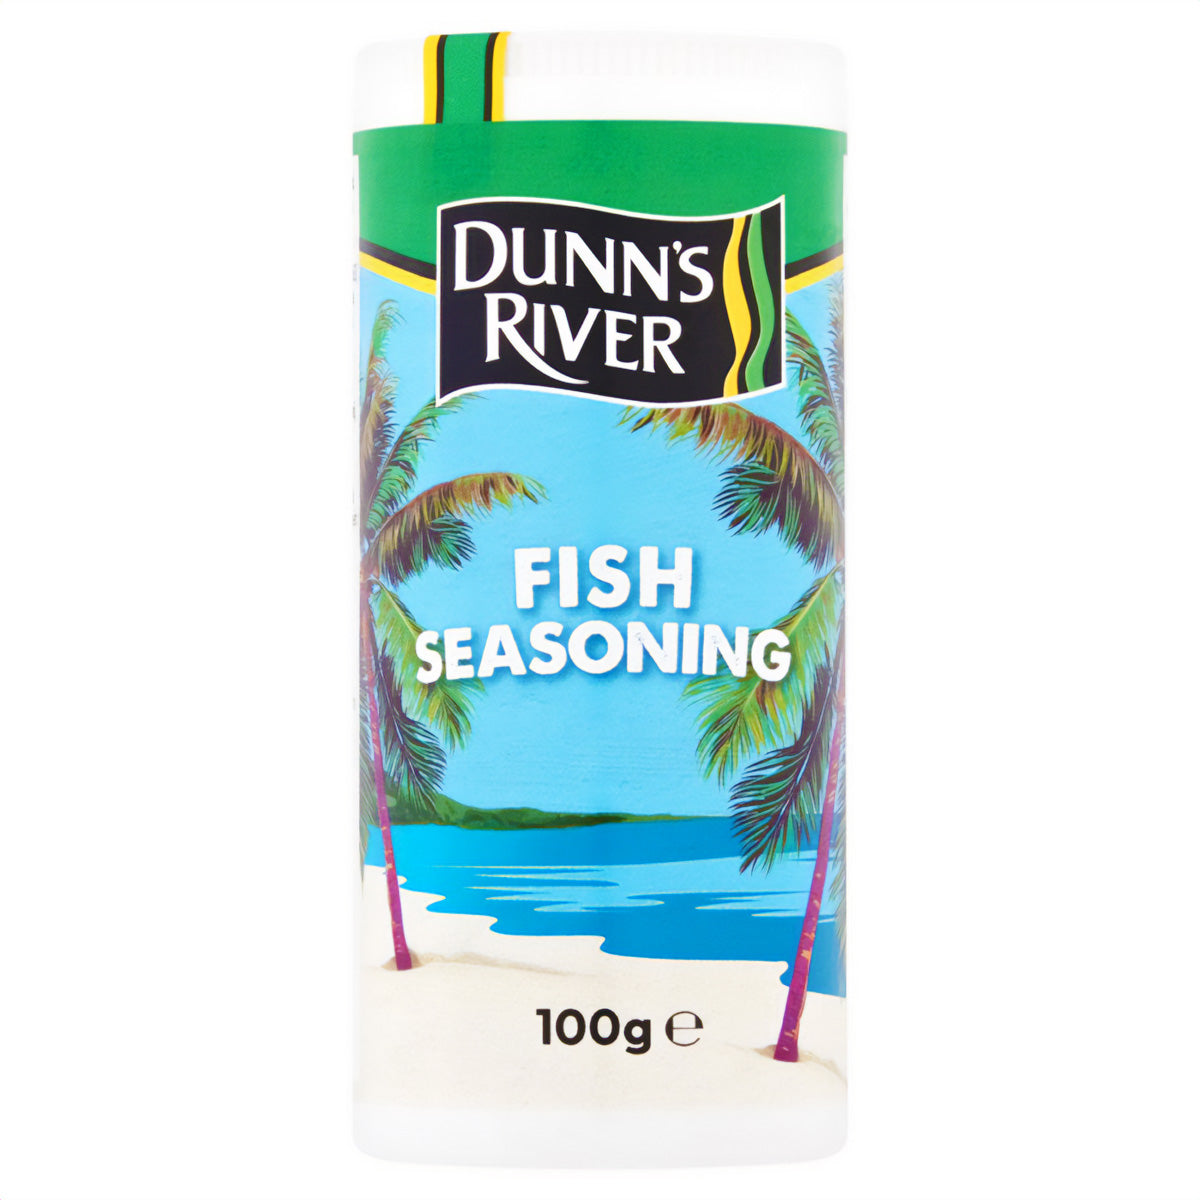 Dunn's River - Fish Seasoning - 100g - Continental Food Store